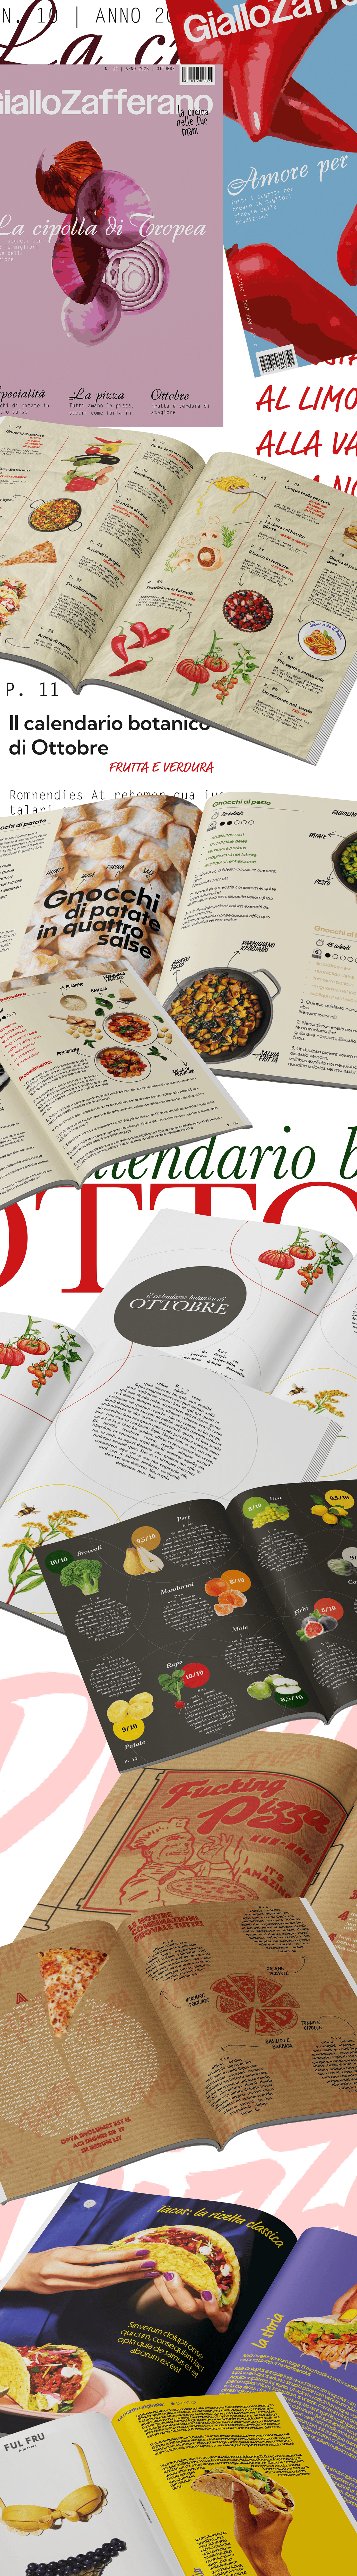 RESTYLING design editorial design  Layout Design typography   Food  food illustration giallozafferano Magazine design cooking